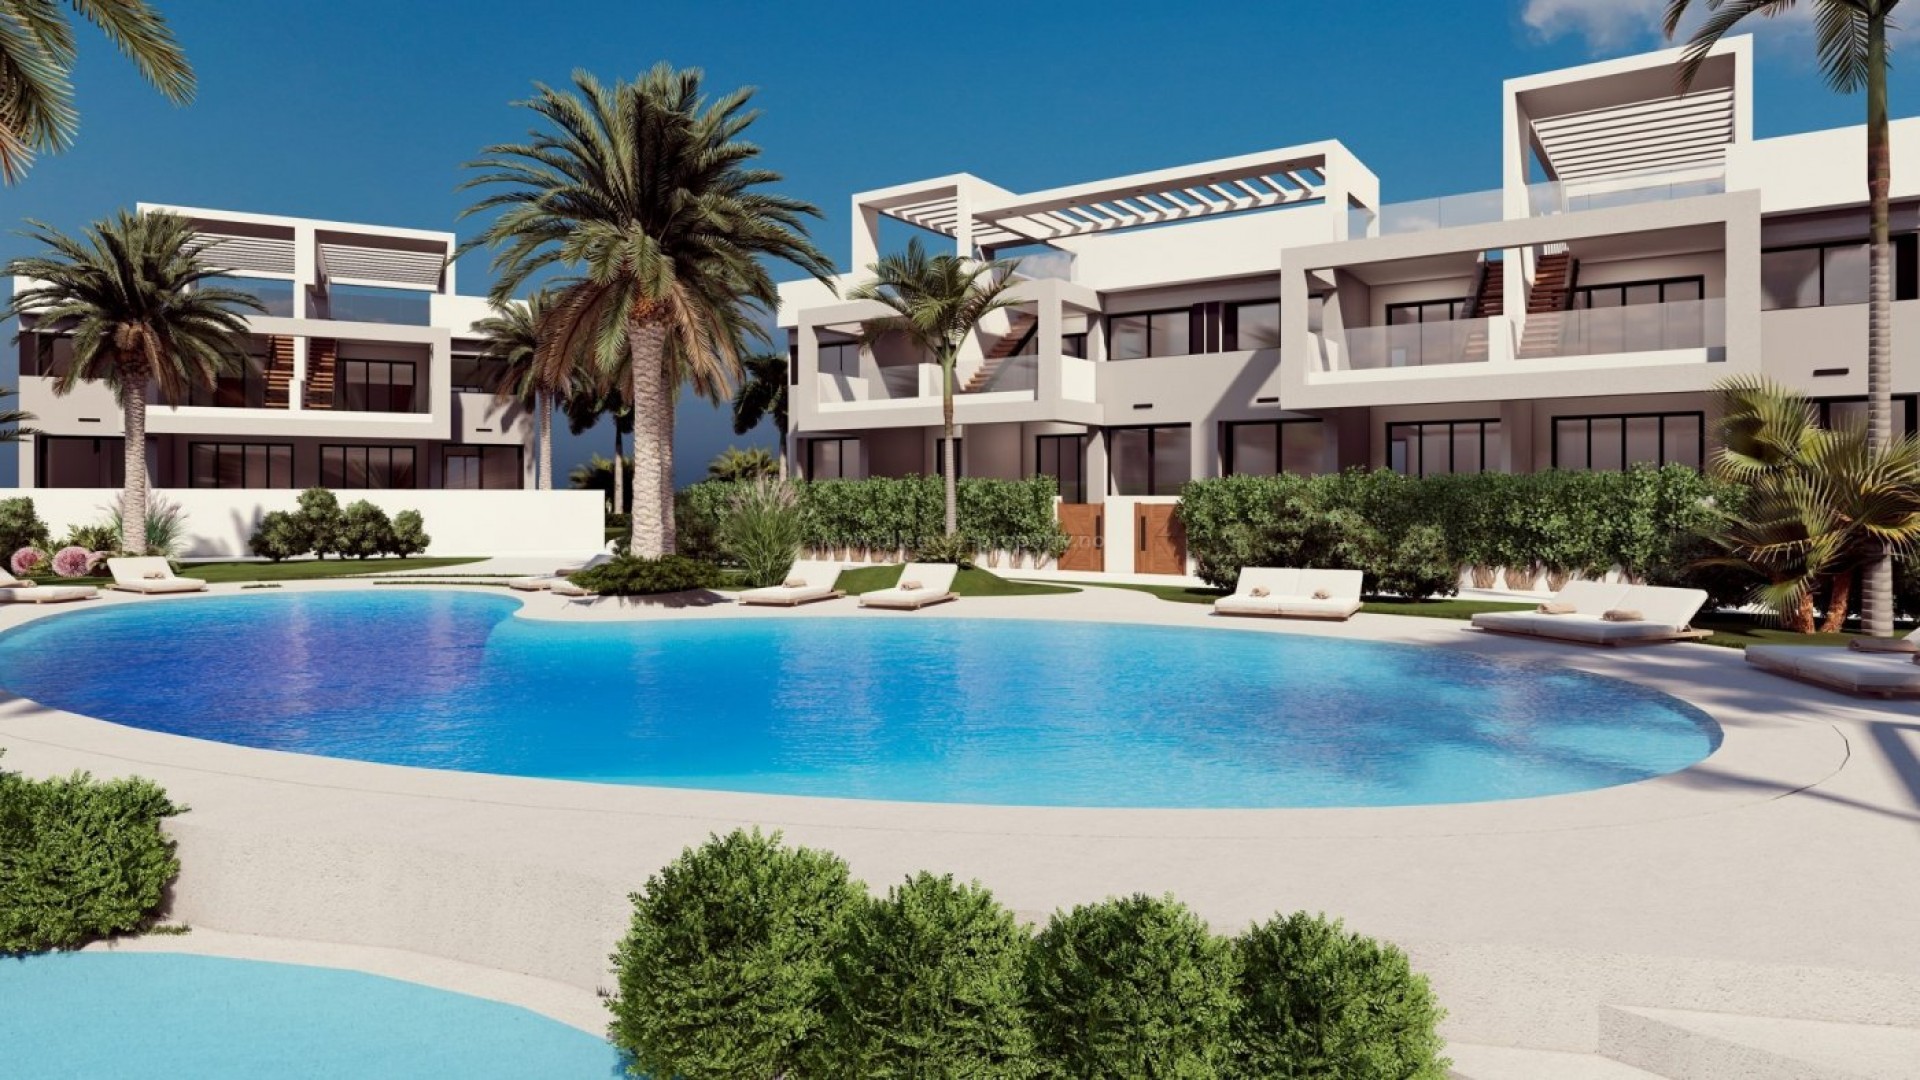 Bungalow apartments in Torrevieja (Los Balcones), 2 bedrooms, 3 pool areas, jacuzzi, gym, terraces or solarium